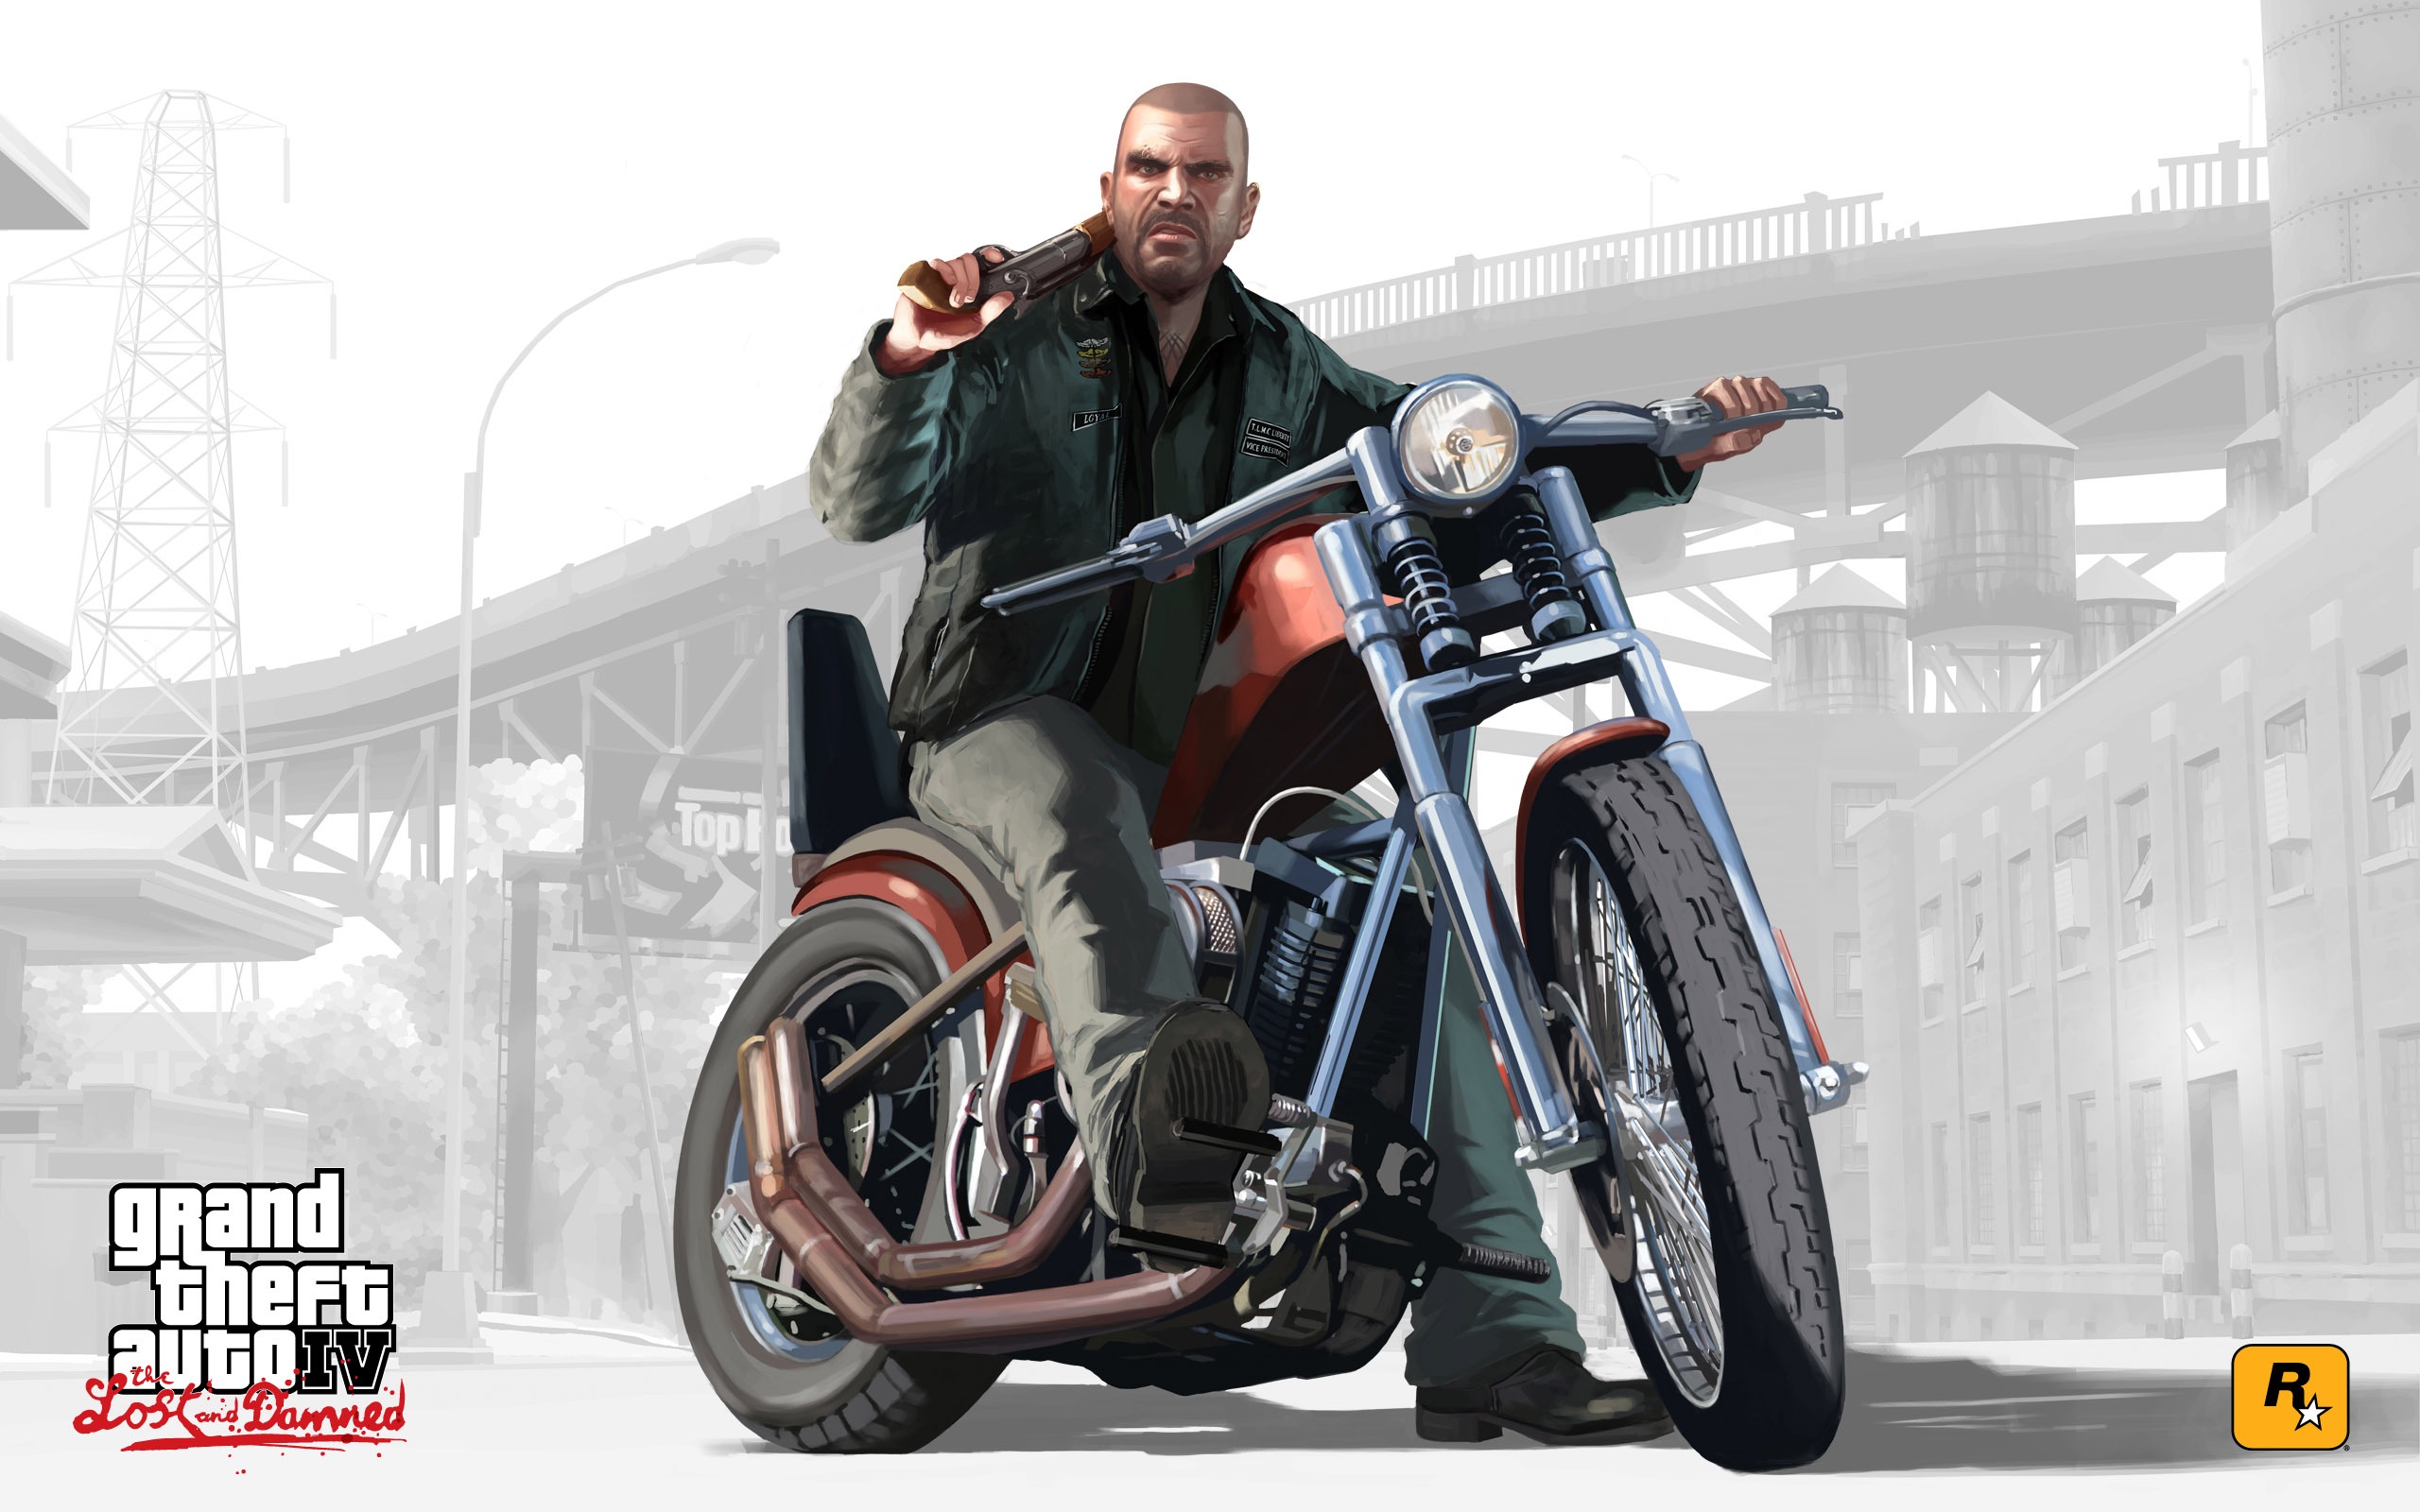 Grand Theft Auto: Vice City fondos de escritorio de alta definición #19 - 2560x1600